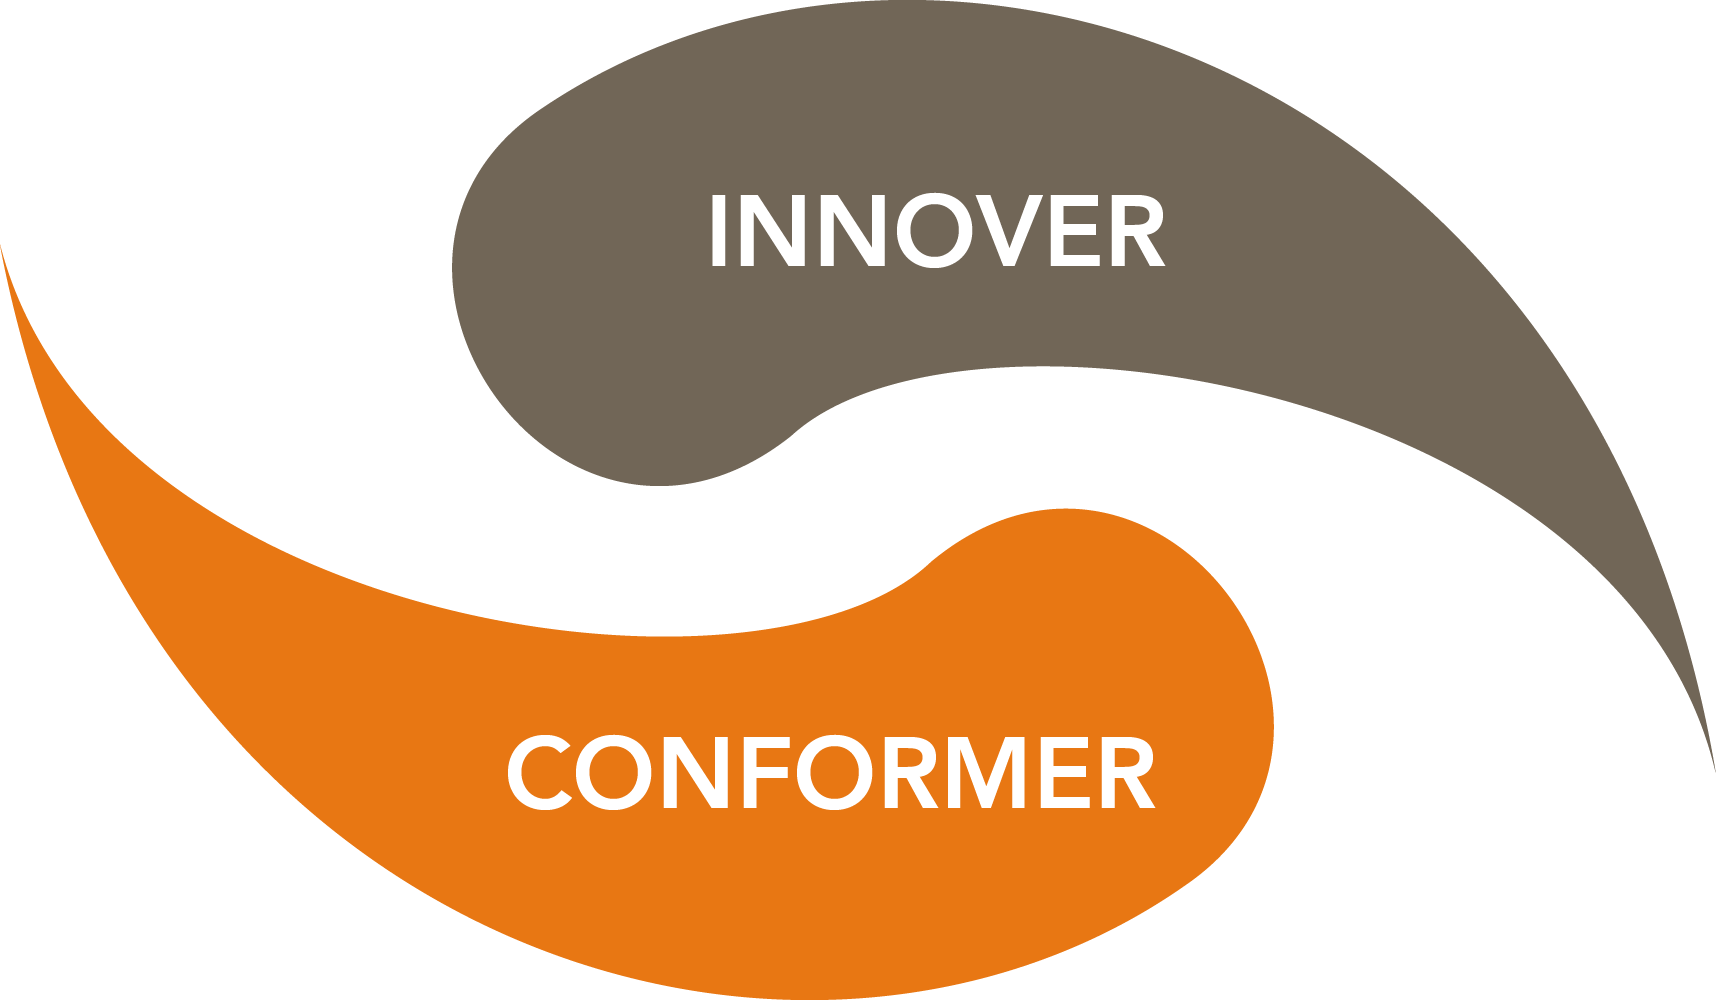 Innover / Conformer